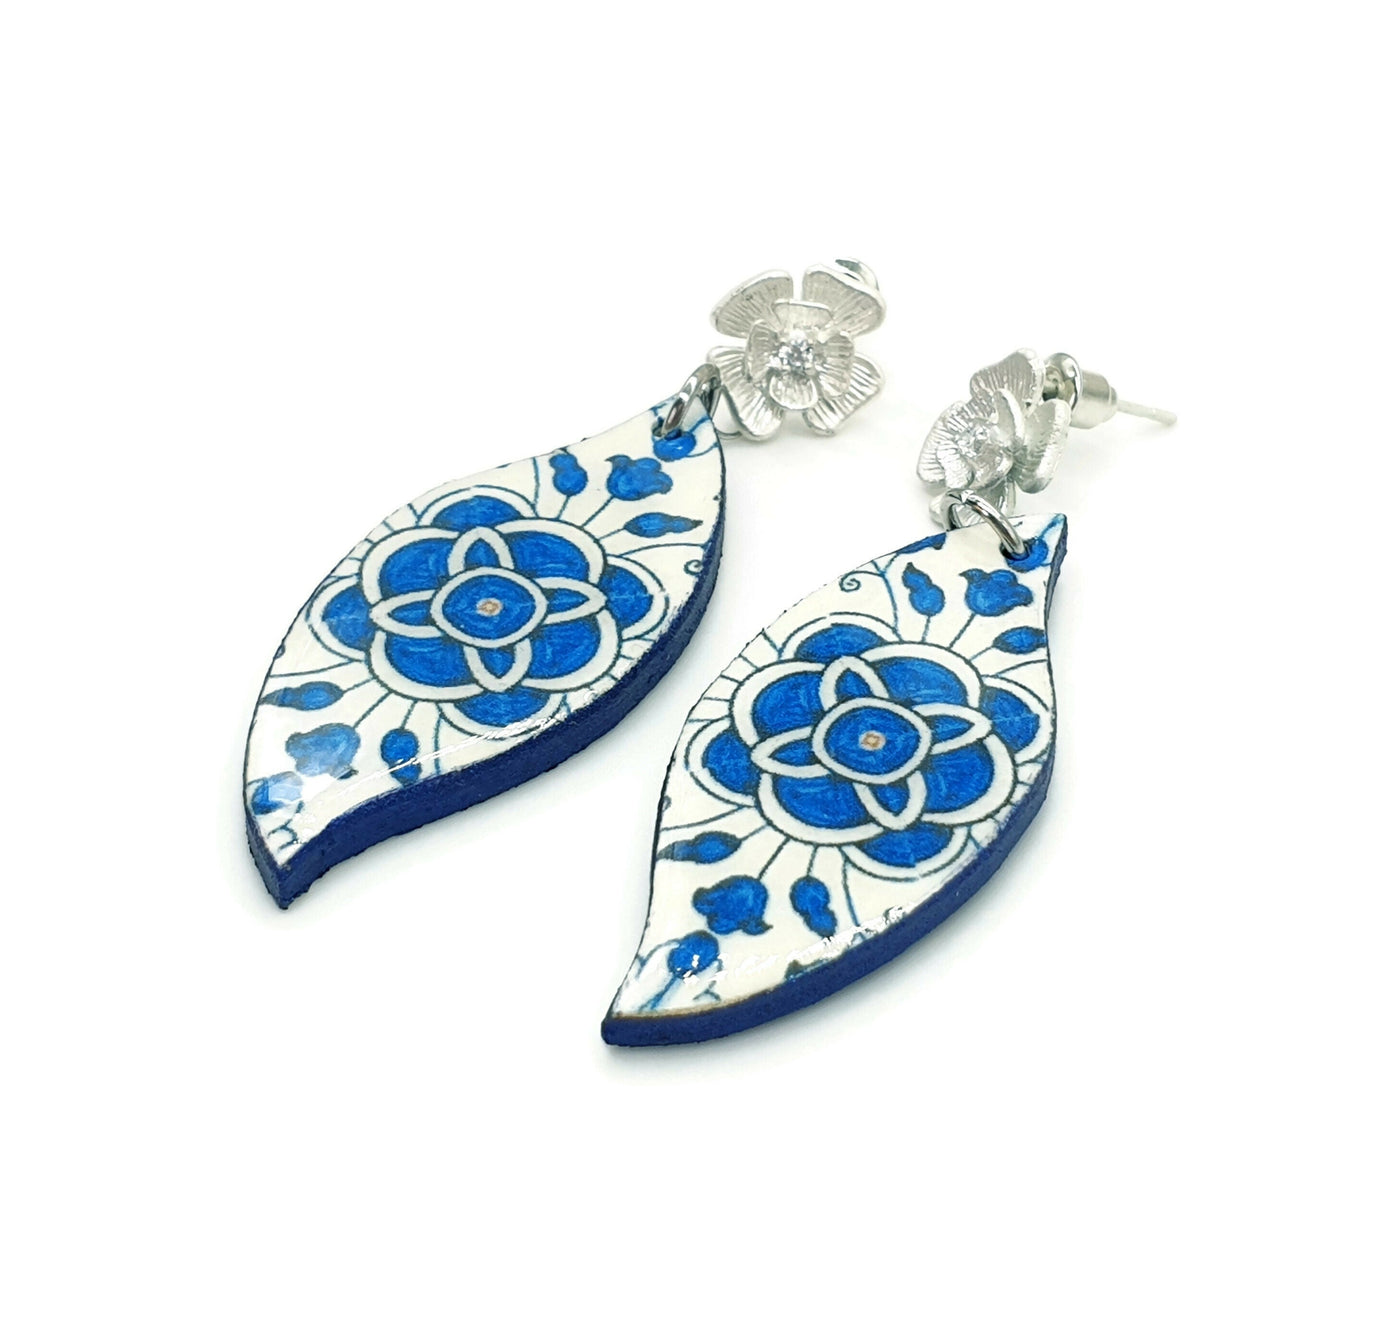 CAMELIA - Portugal Teardrop Blue White Tile Earrings